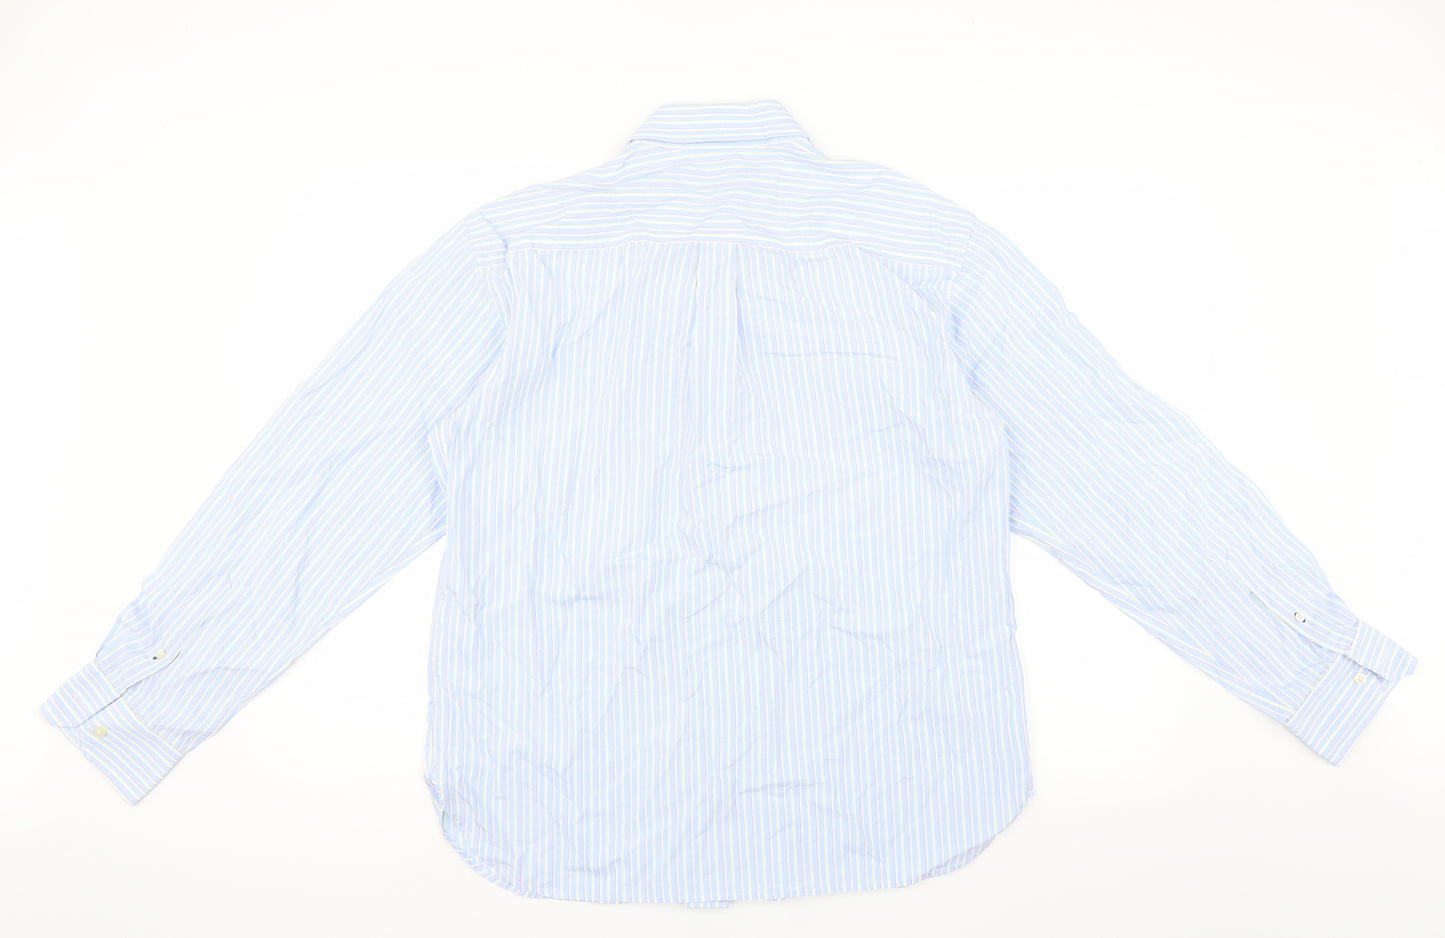 Marks and Spencer Mens Blue Striped   Dress Shirt Size M